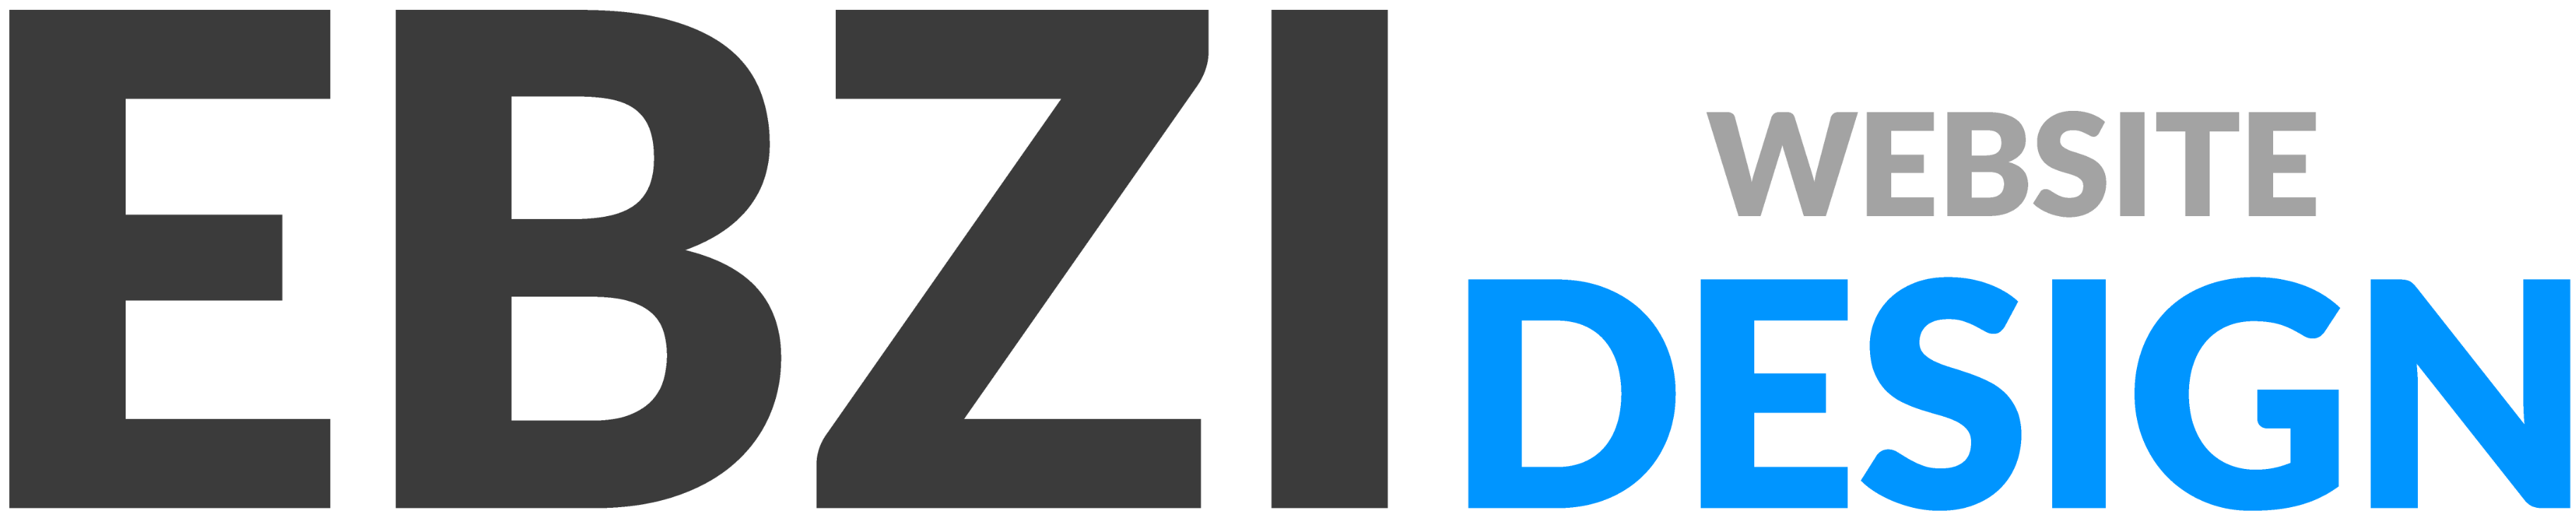 Logo of EBZI LTD